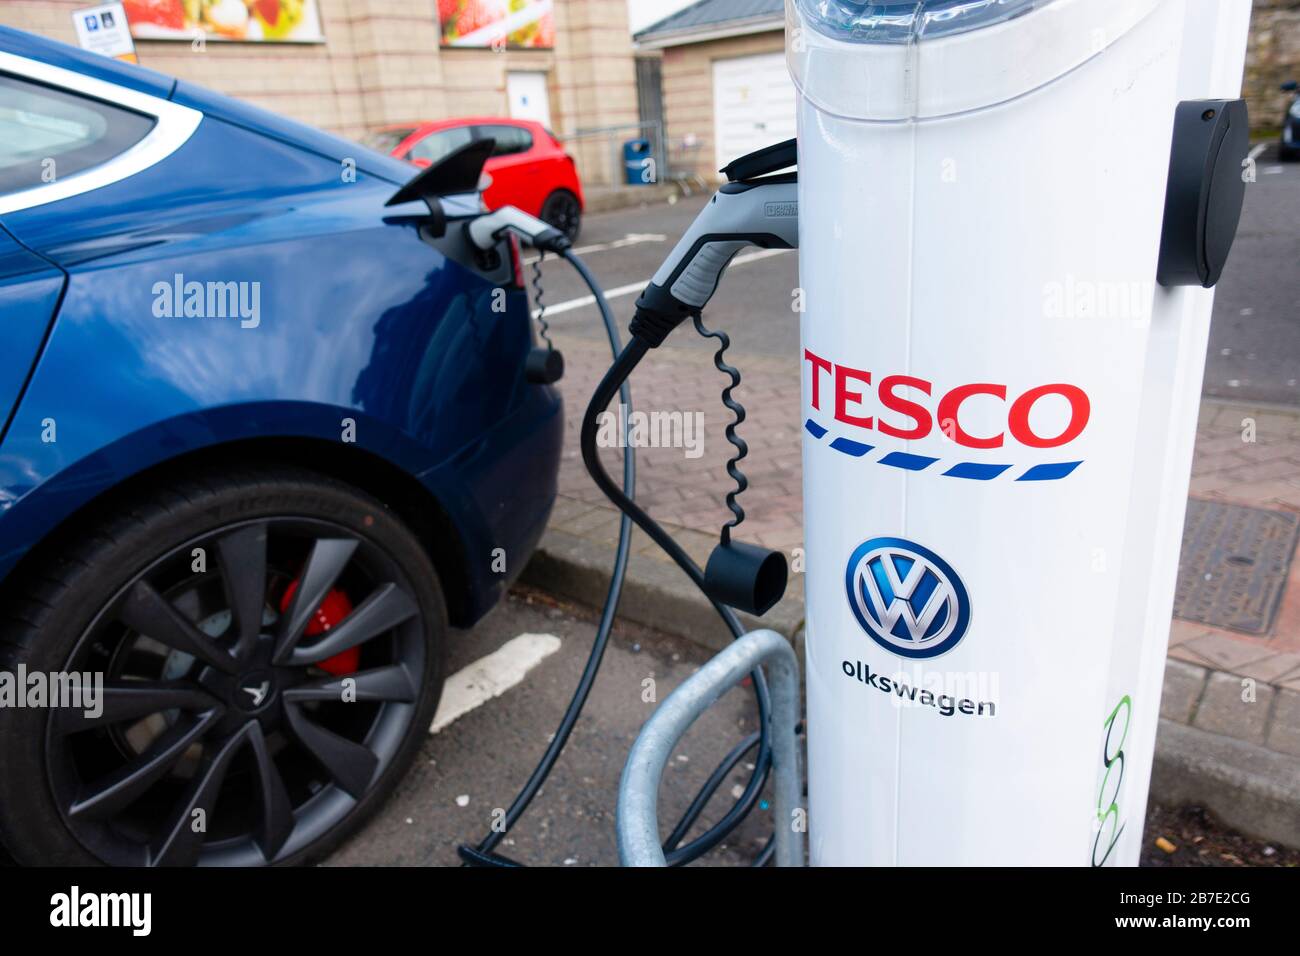 Tesla electric car charging at free charging station in Tesco supermarket, UK, United Kingdom Stock Photo